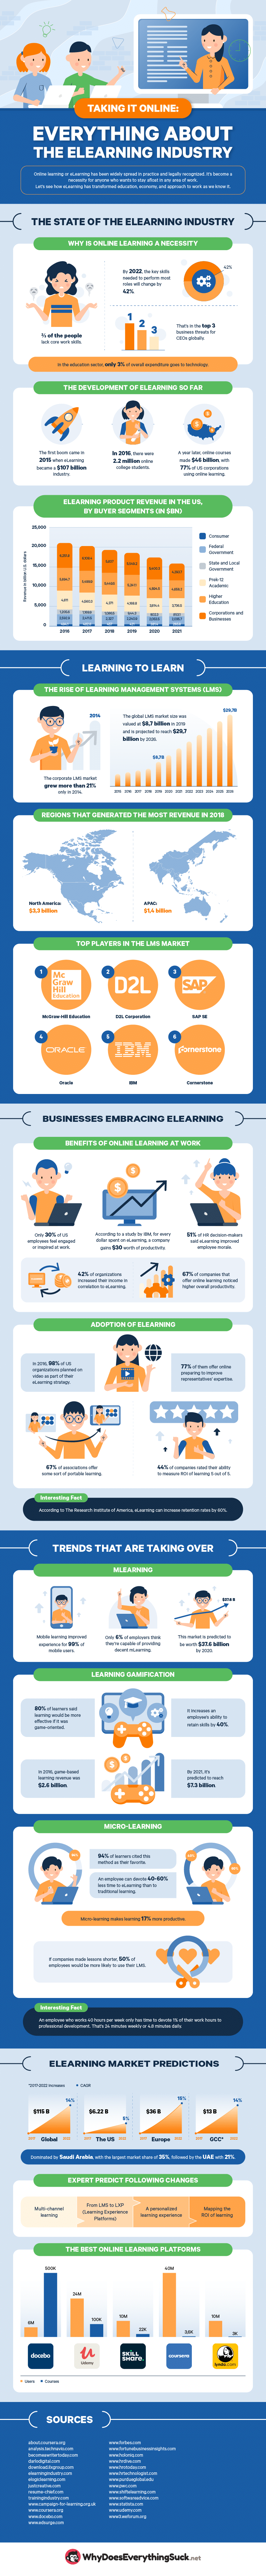 eLearning Statistics Infographic